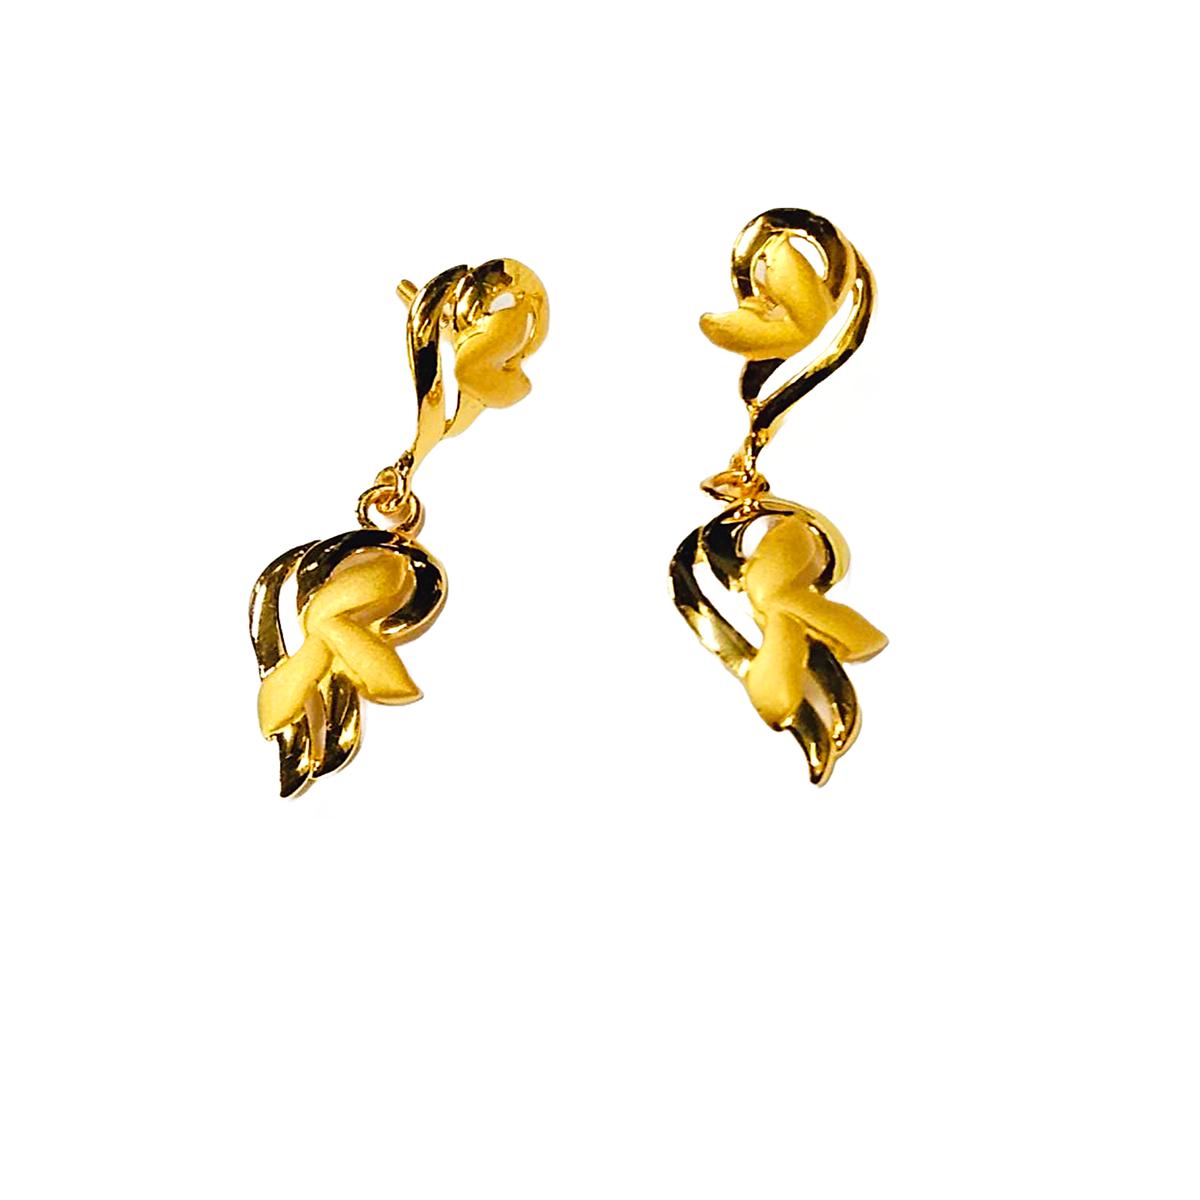 Lina gold earrings